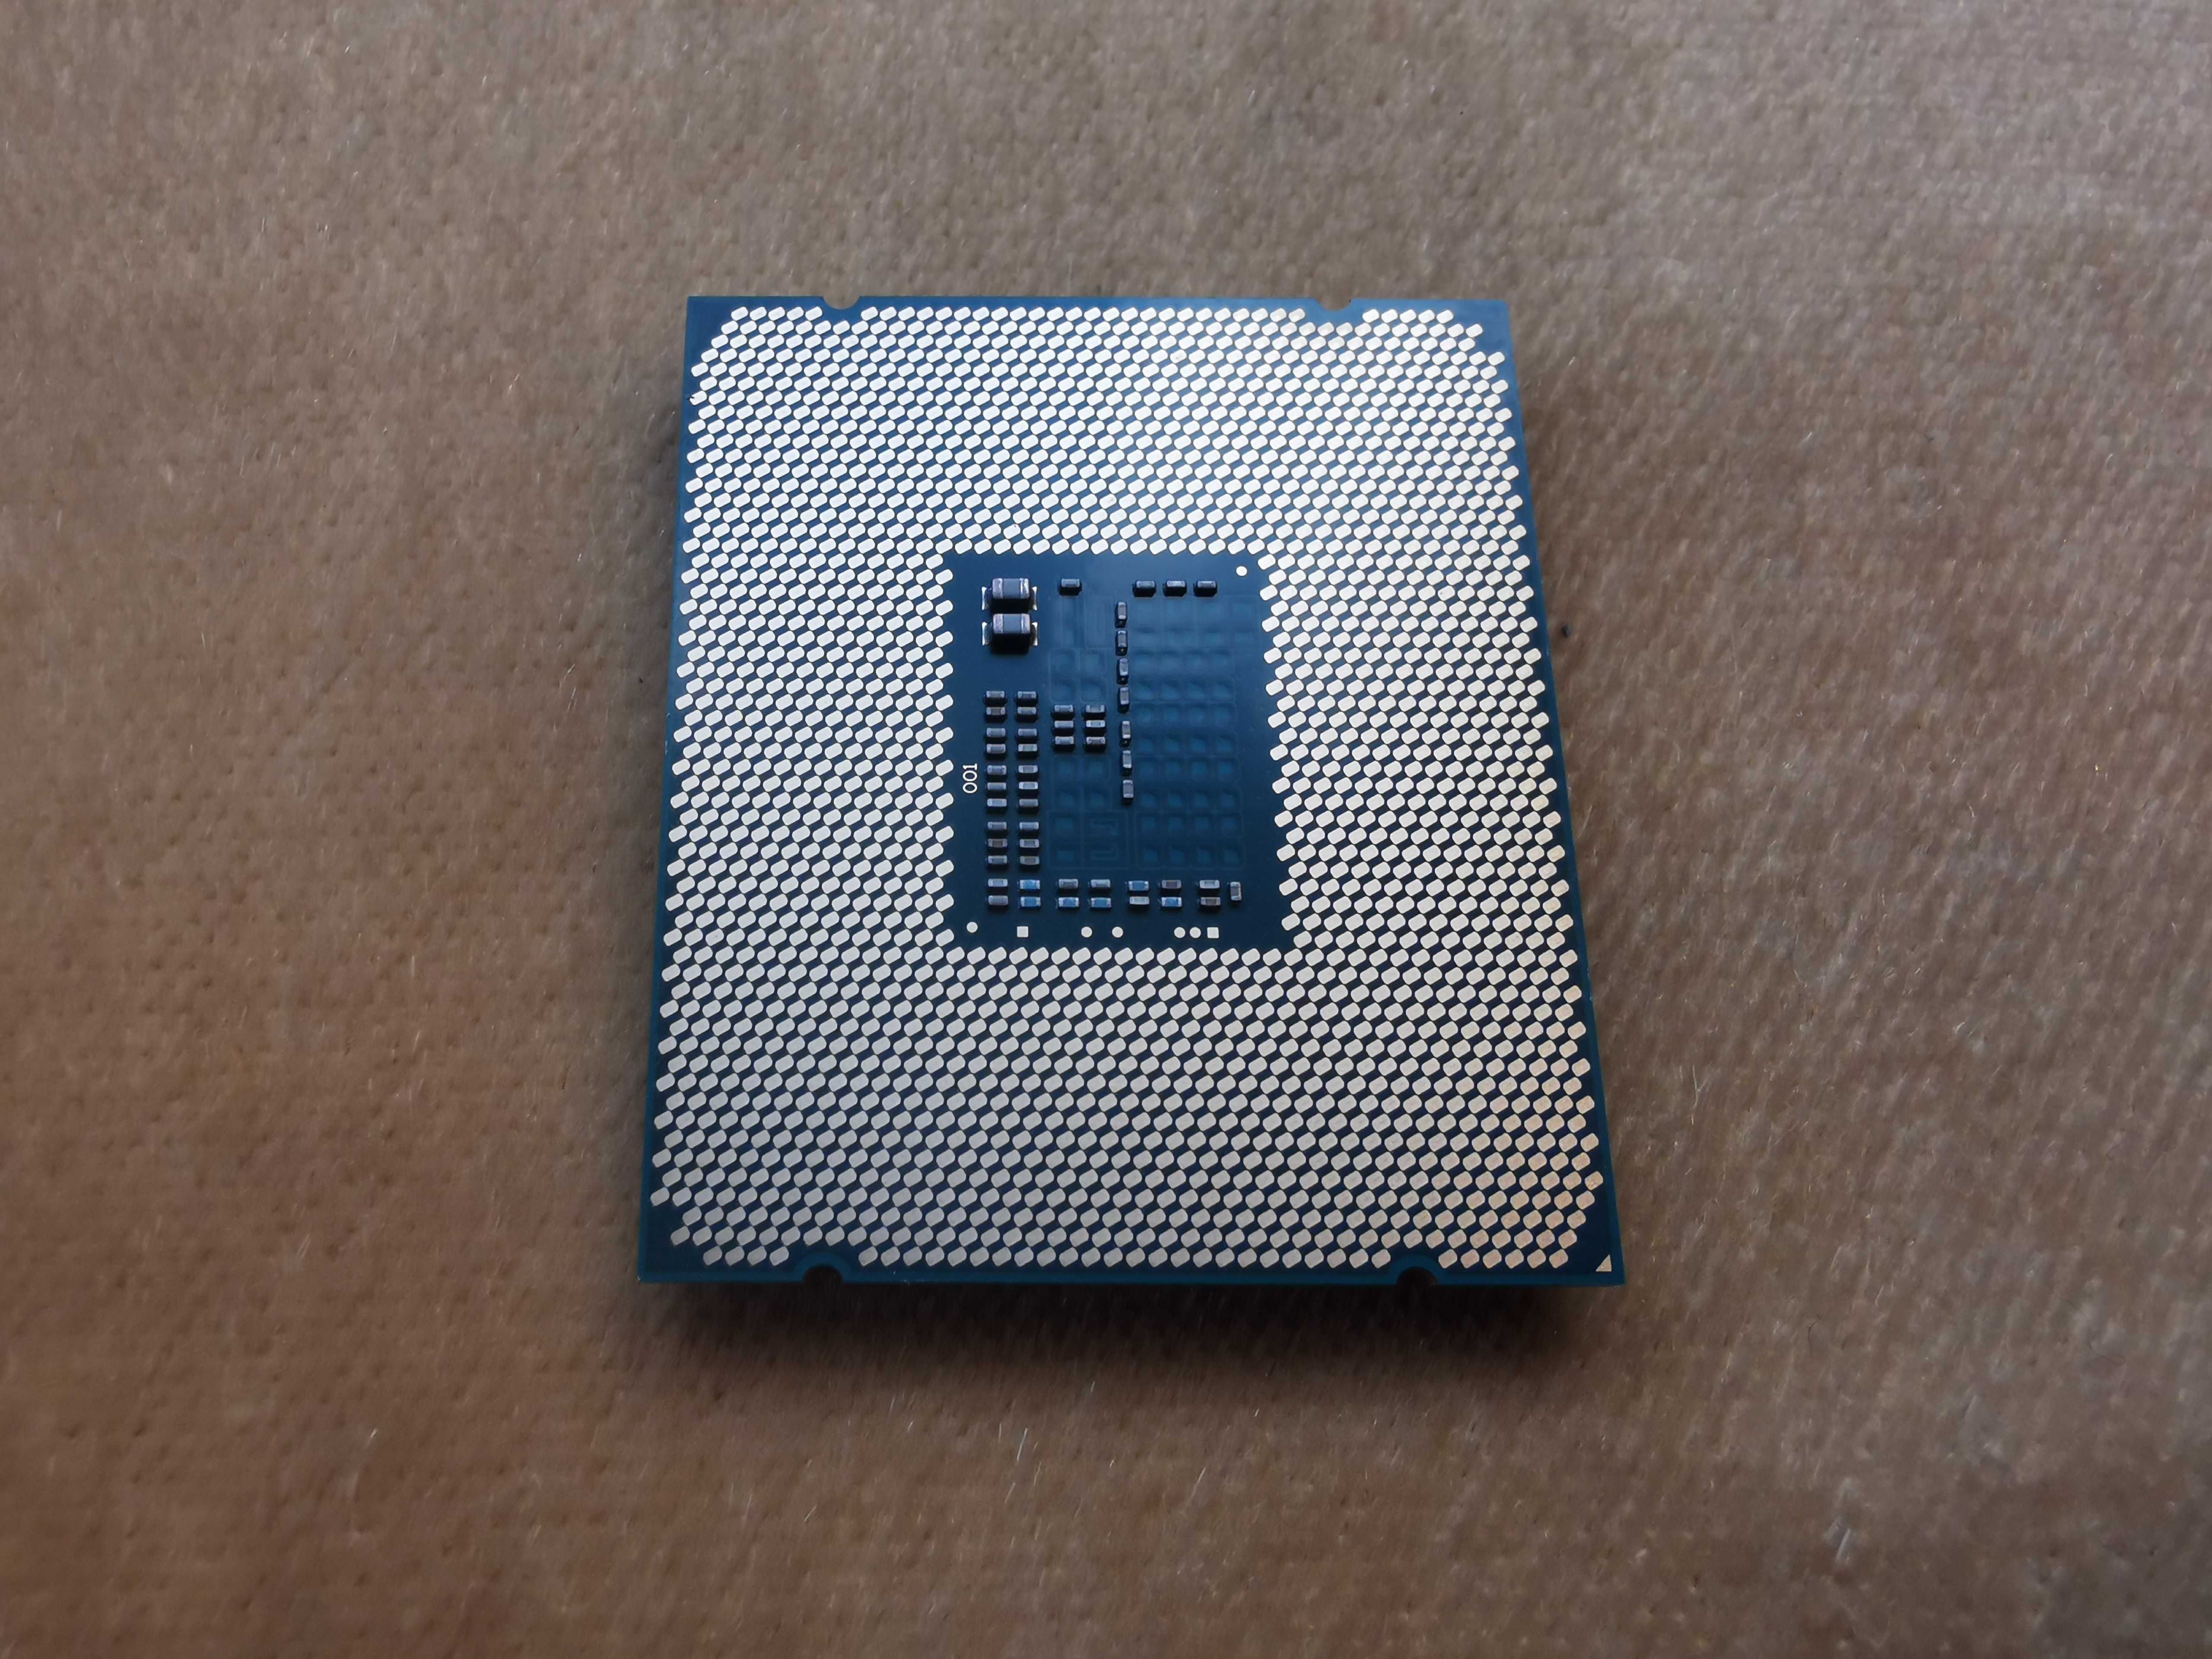 Procesor intel core i7 5930k 6 core 12 thread